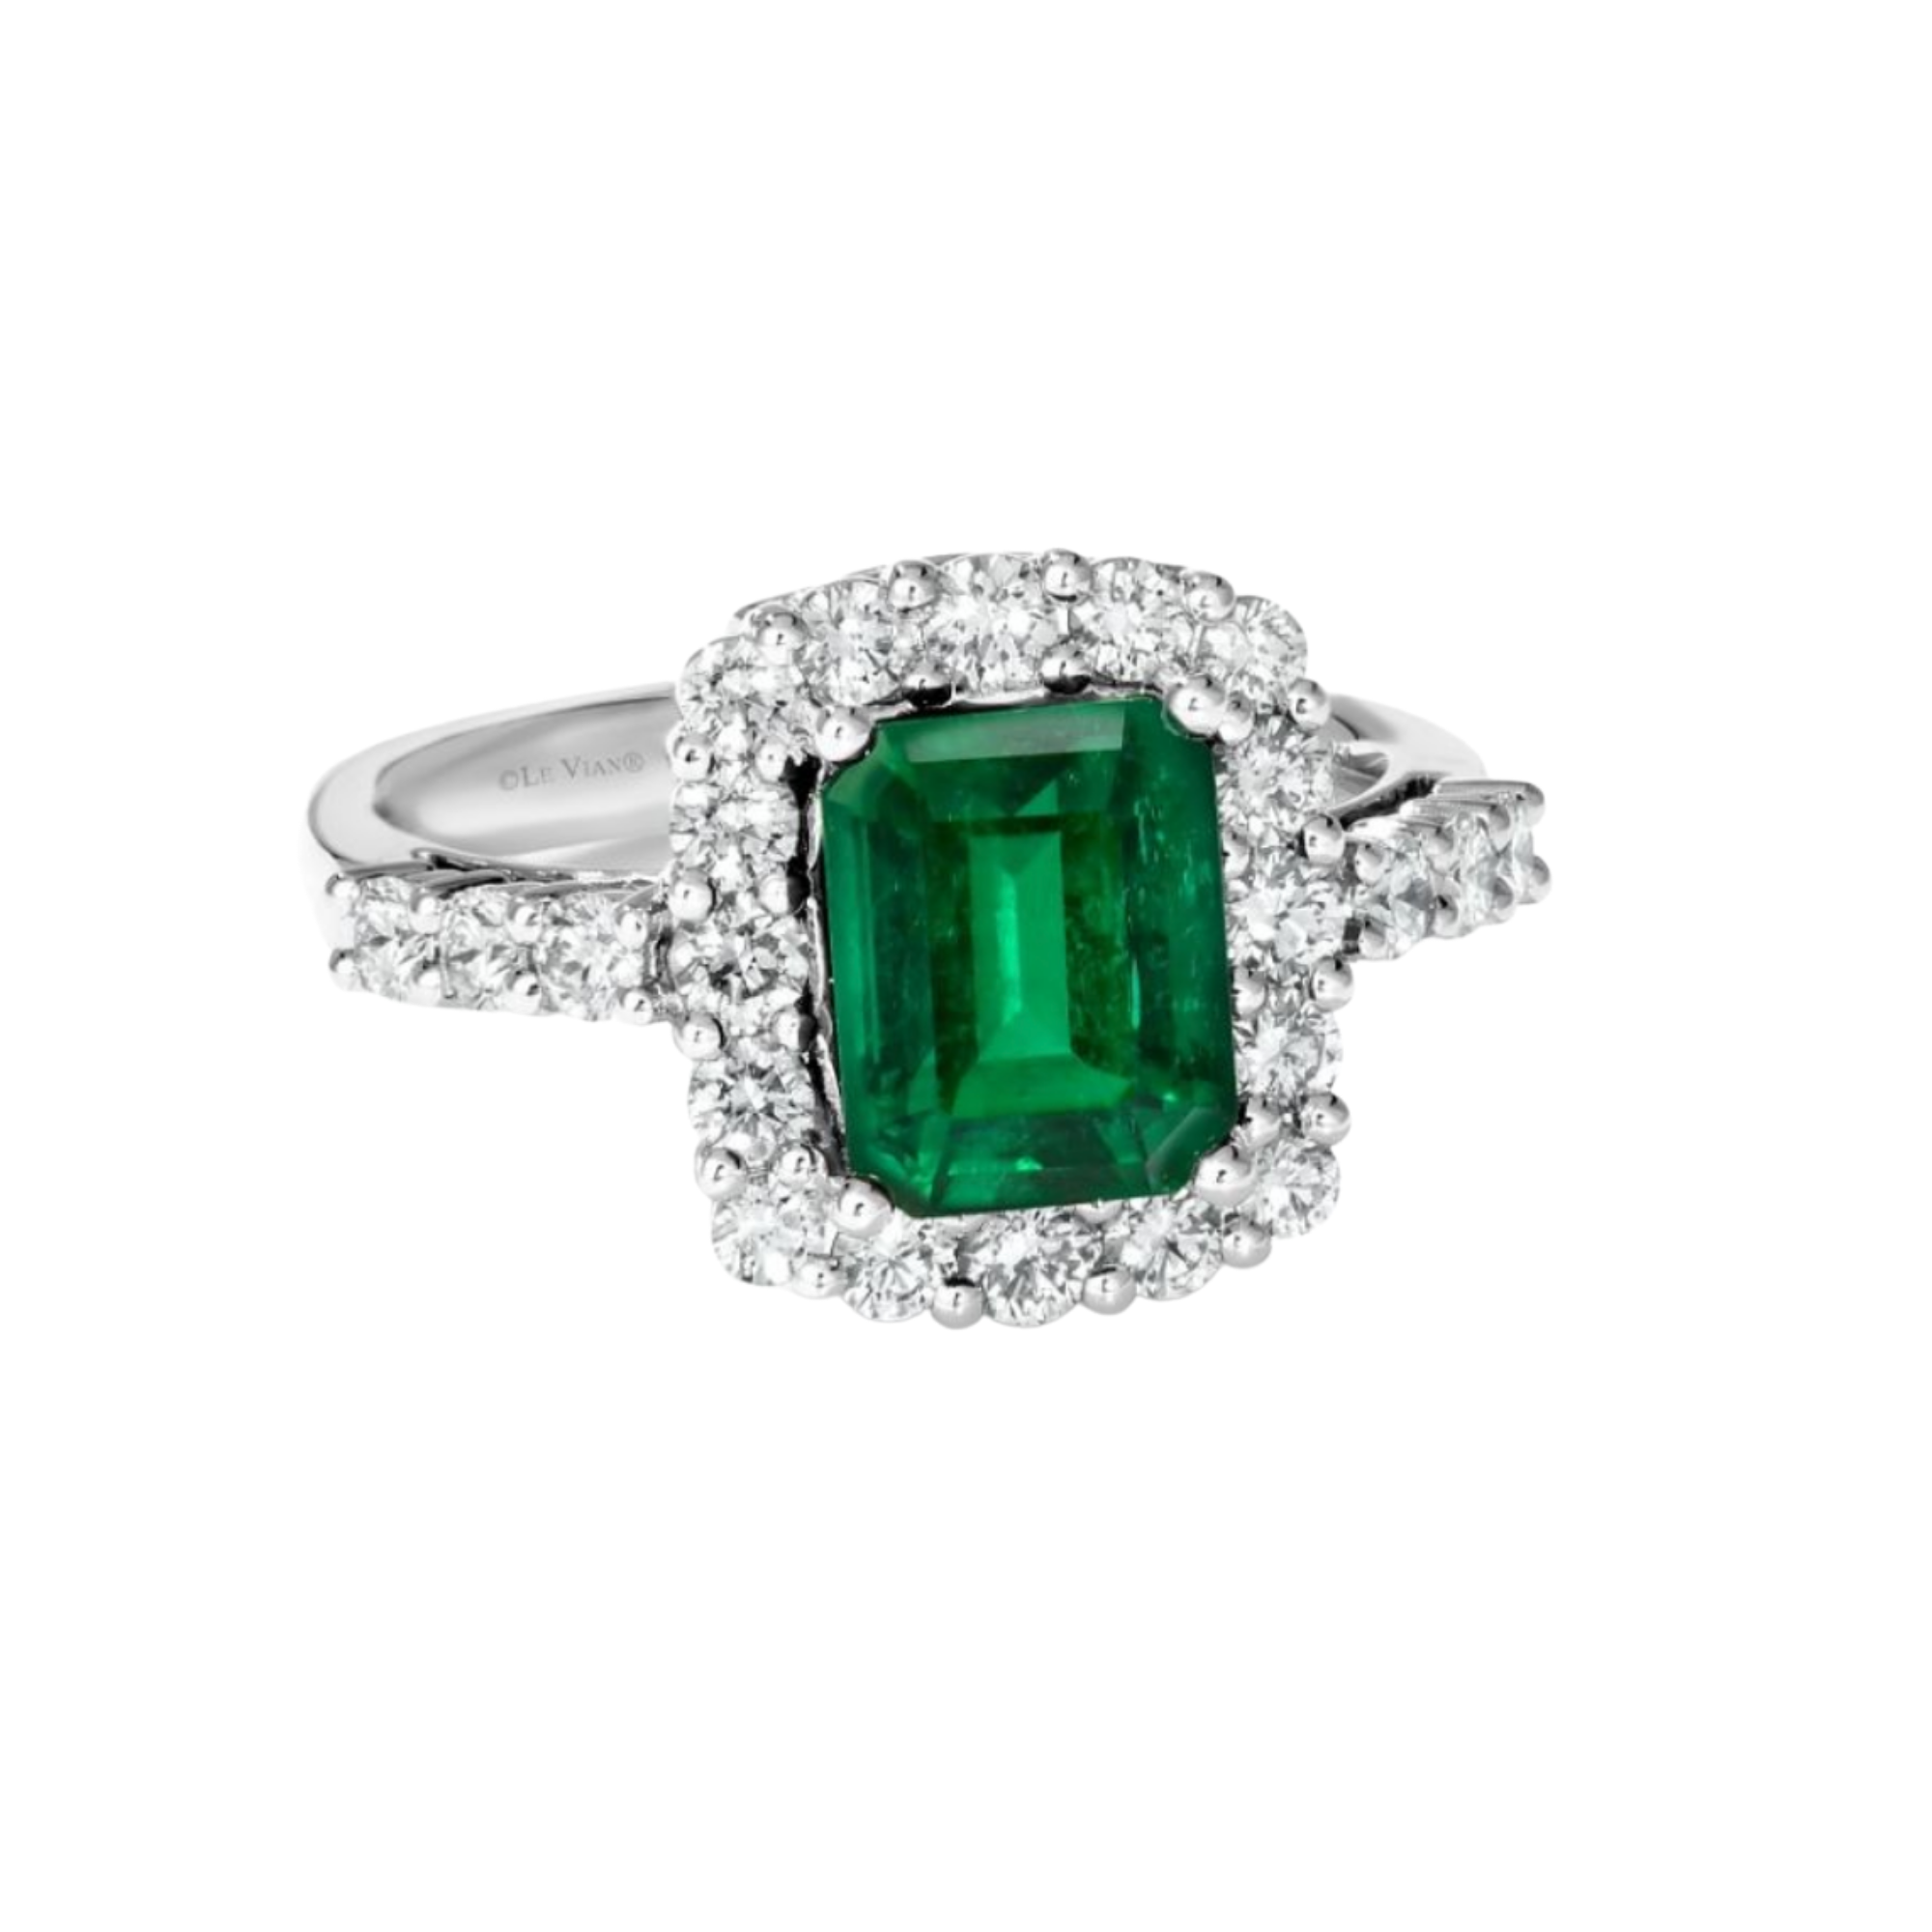 Le Vian emerald and vanilla diamond platinum ring, $4,999 at Alter’s Gem